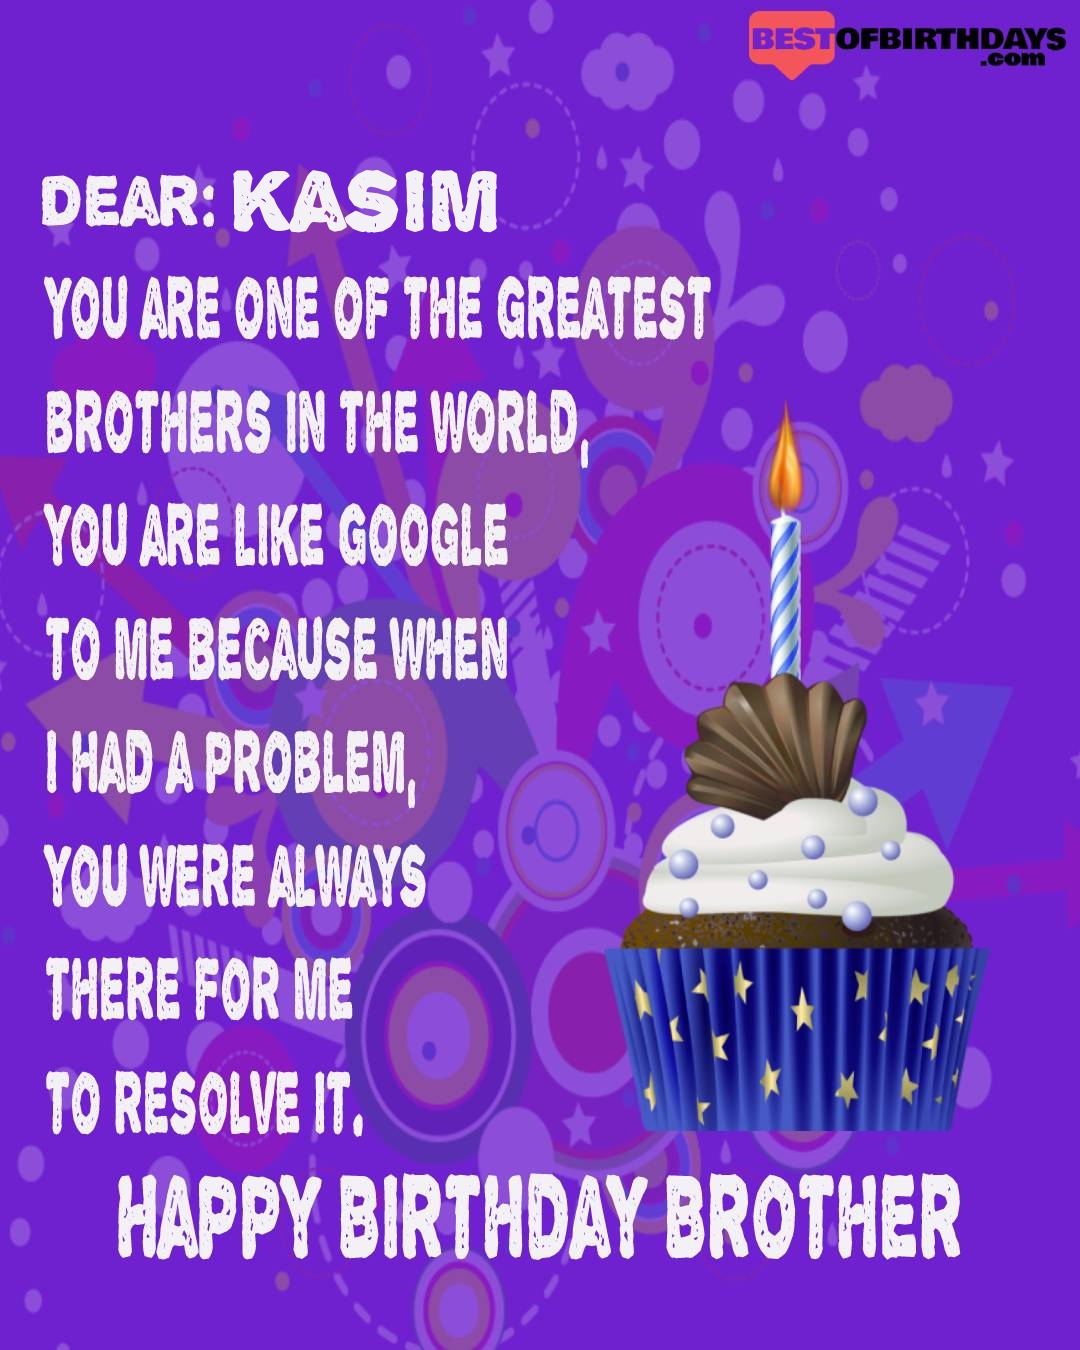 Happy birthday kasim bhai brother bro